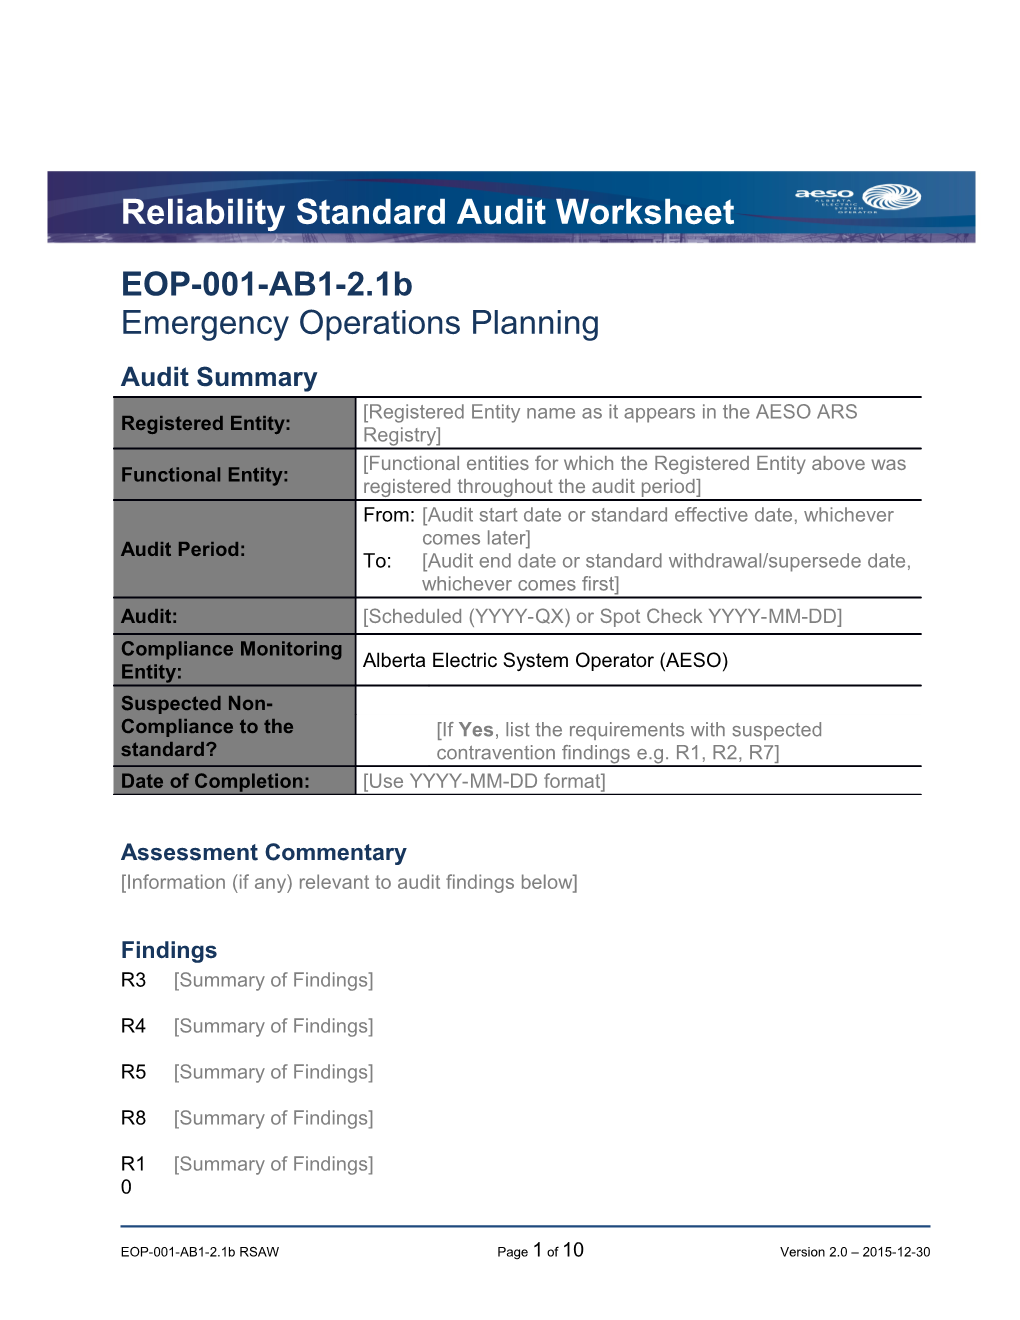 EOP-001-AB1-2.1B Emergency Operations Planning